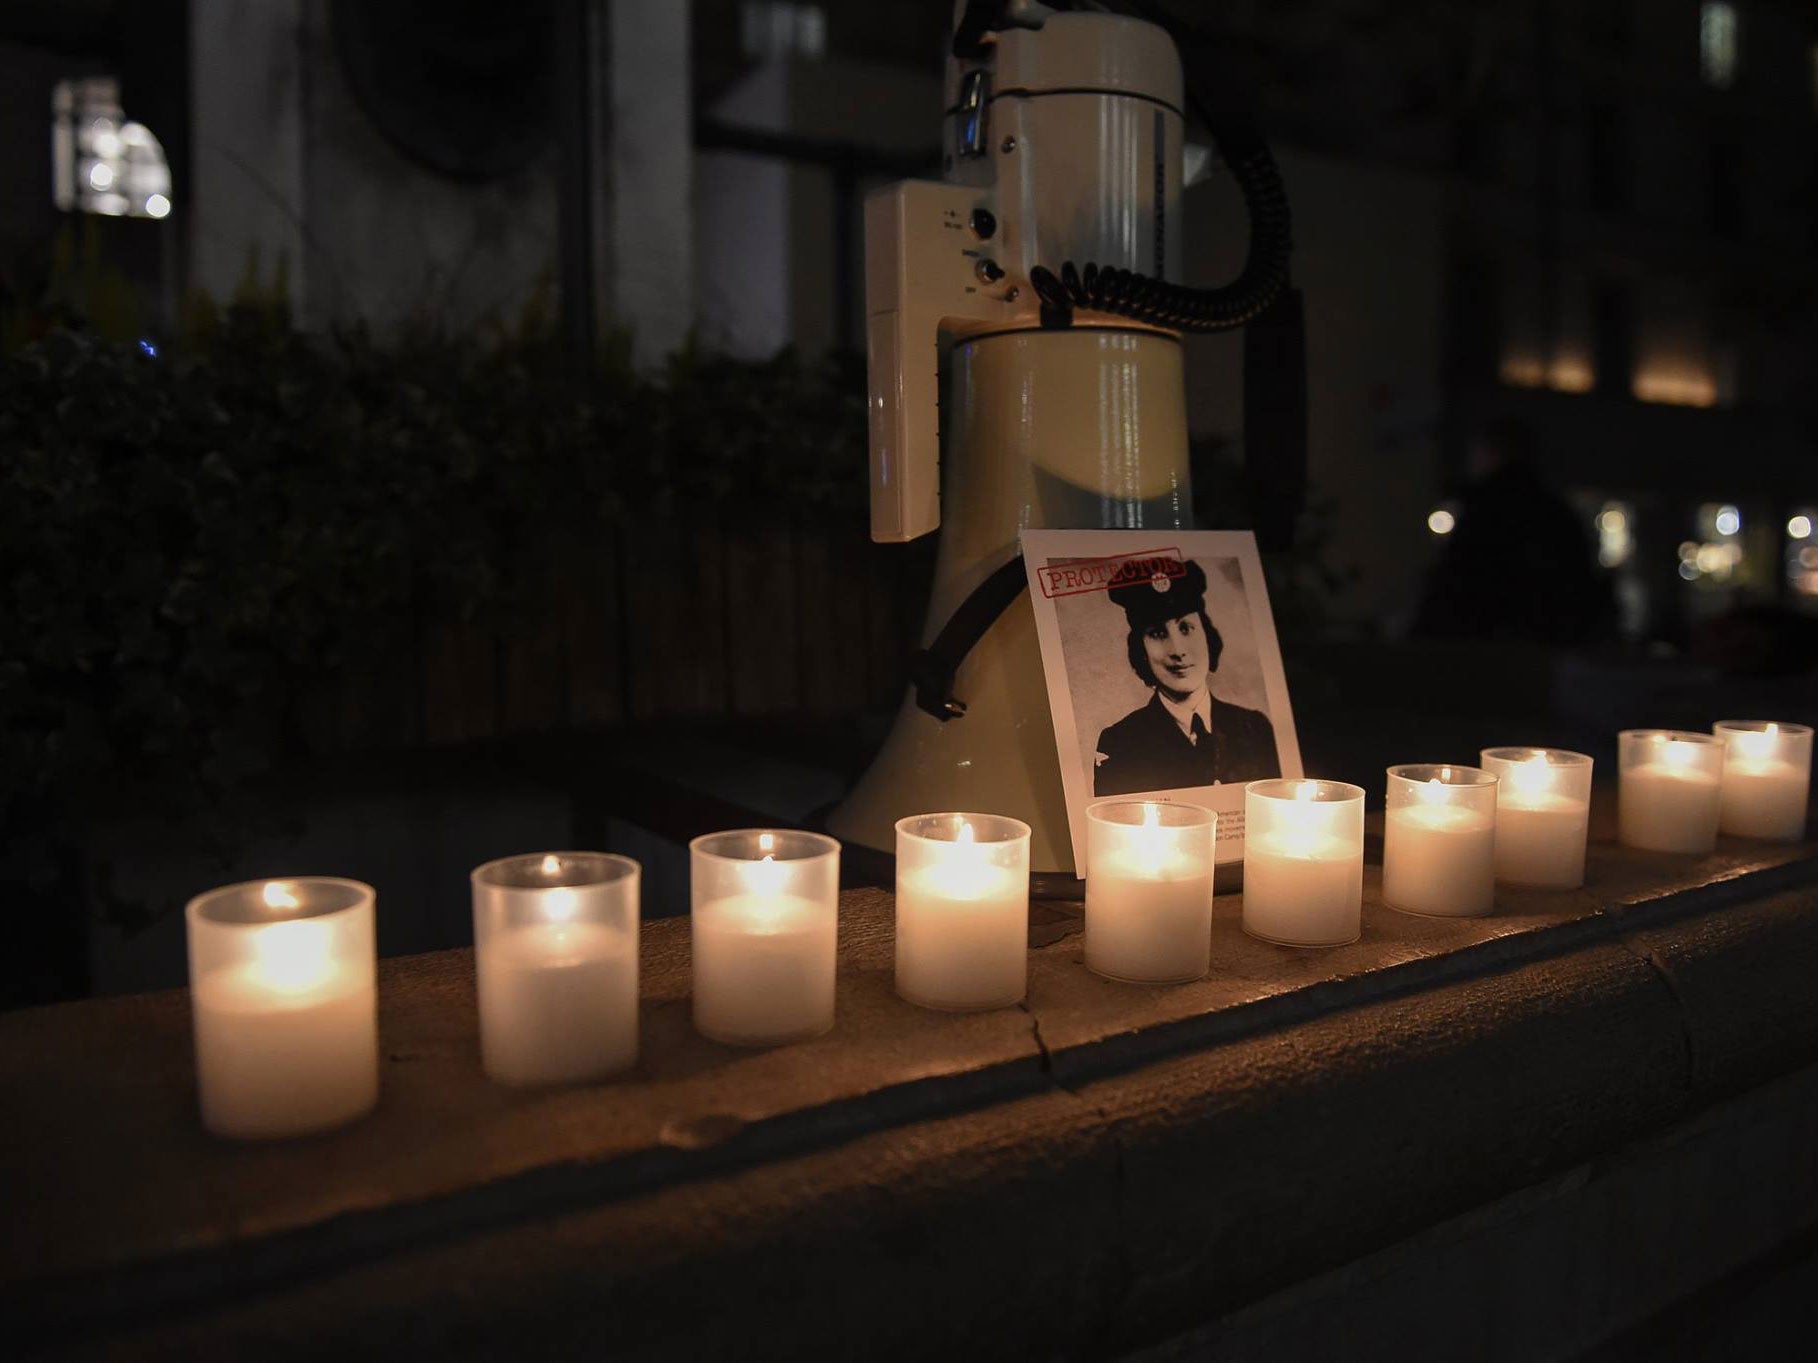 Muslim war hero, Noor Inayat Khan, commemorated in interfaith memorial ceremony